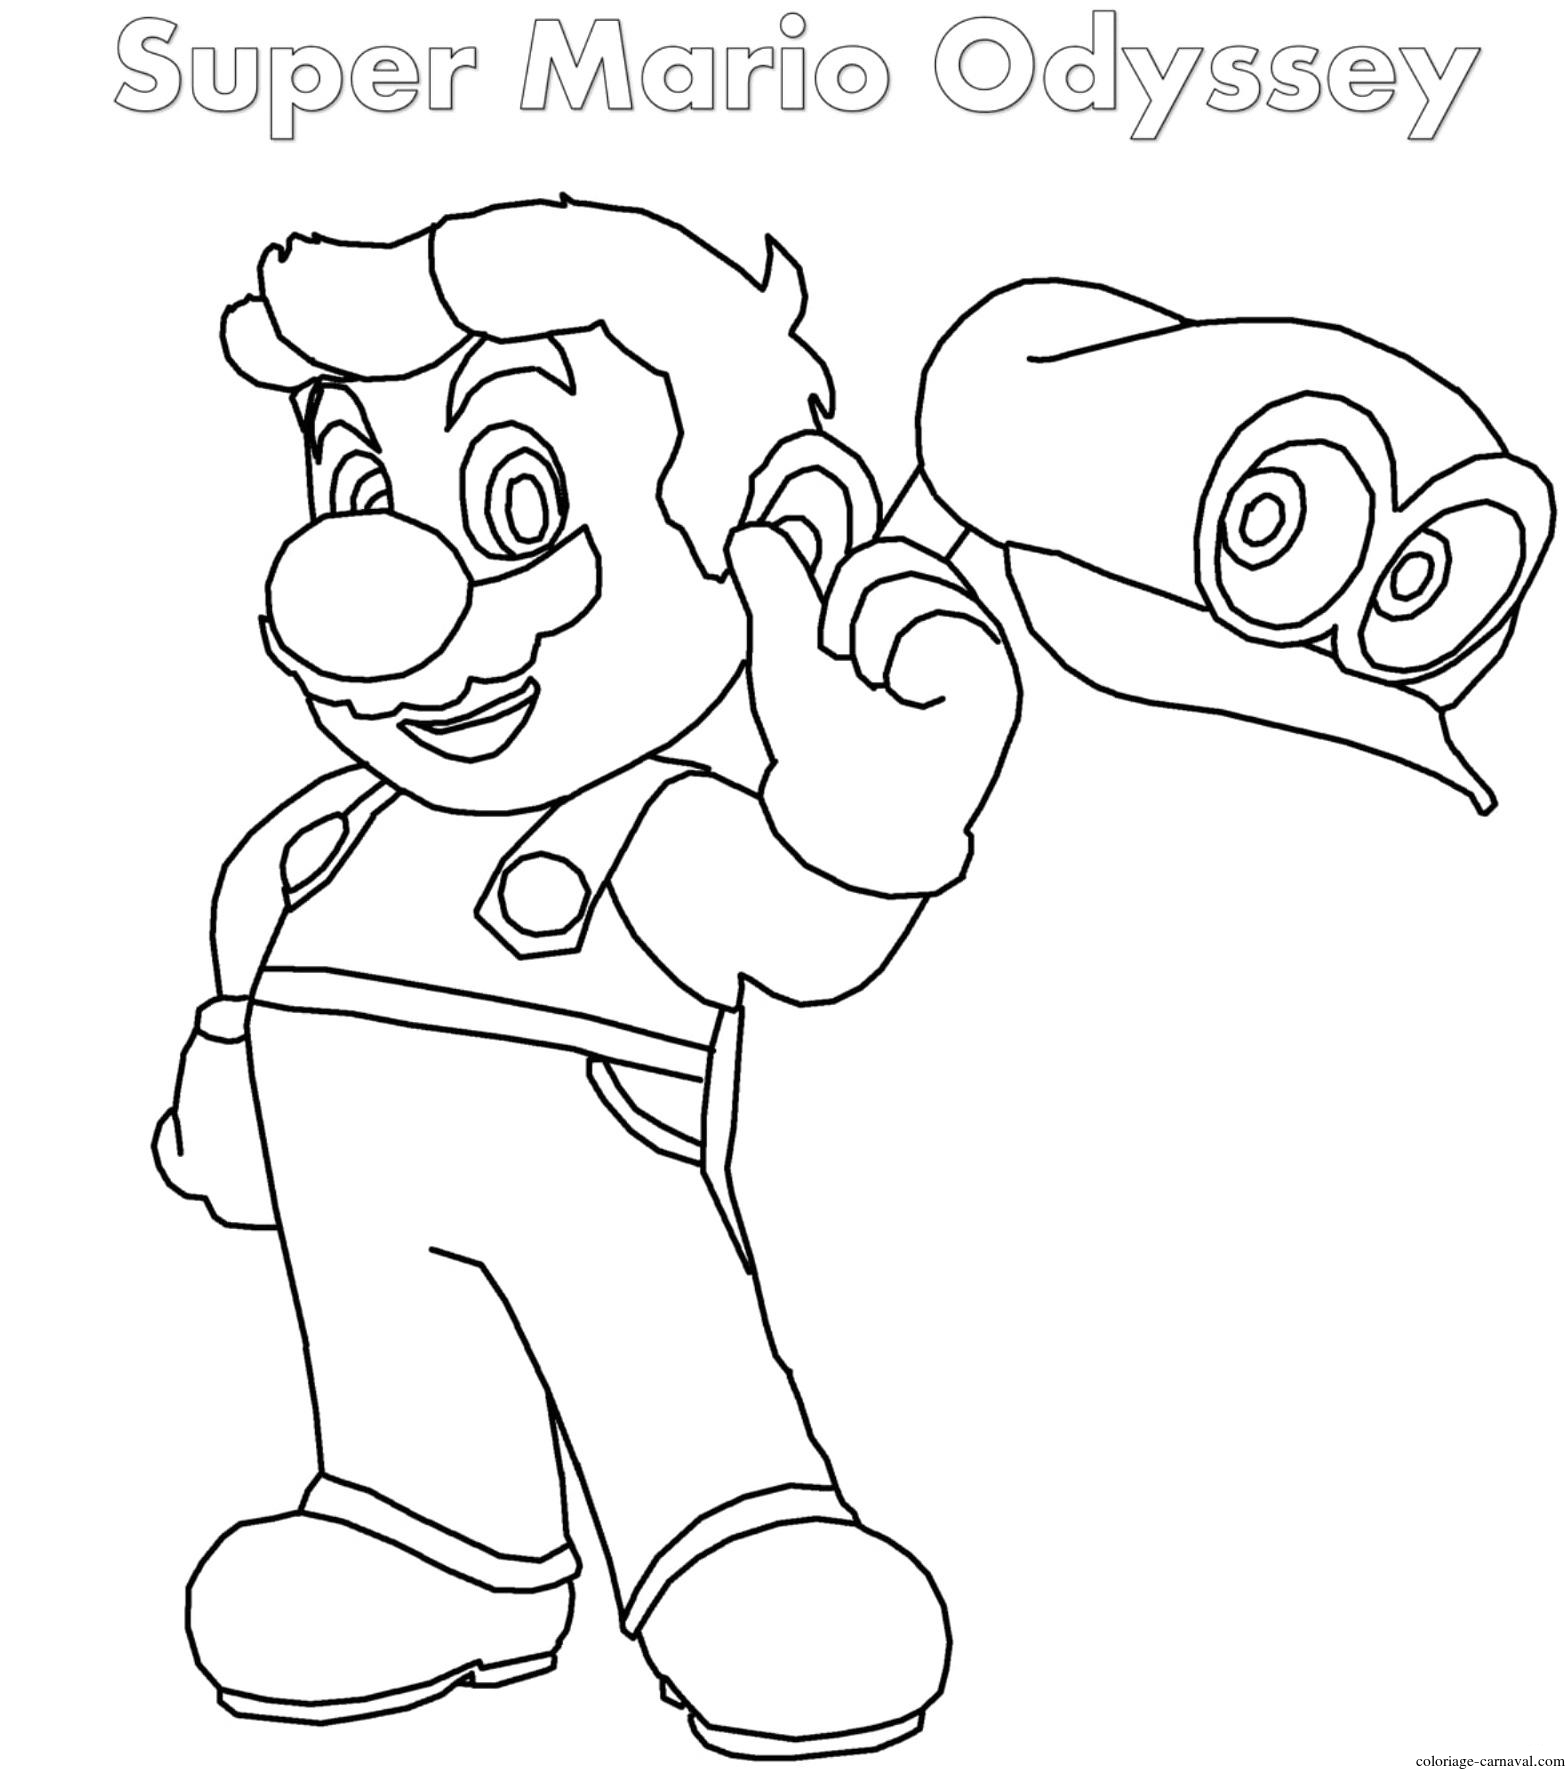 Coloriage Super Mario Odyssey À Imprimer Gratuit encequiconcerne Dessin A Imprimer Mario 